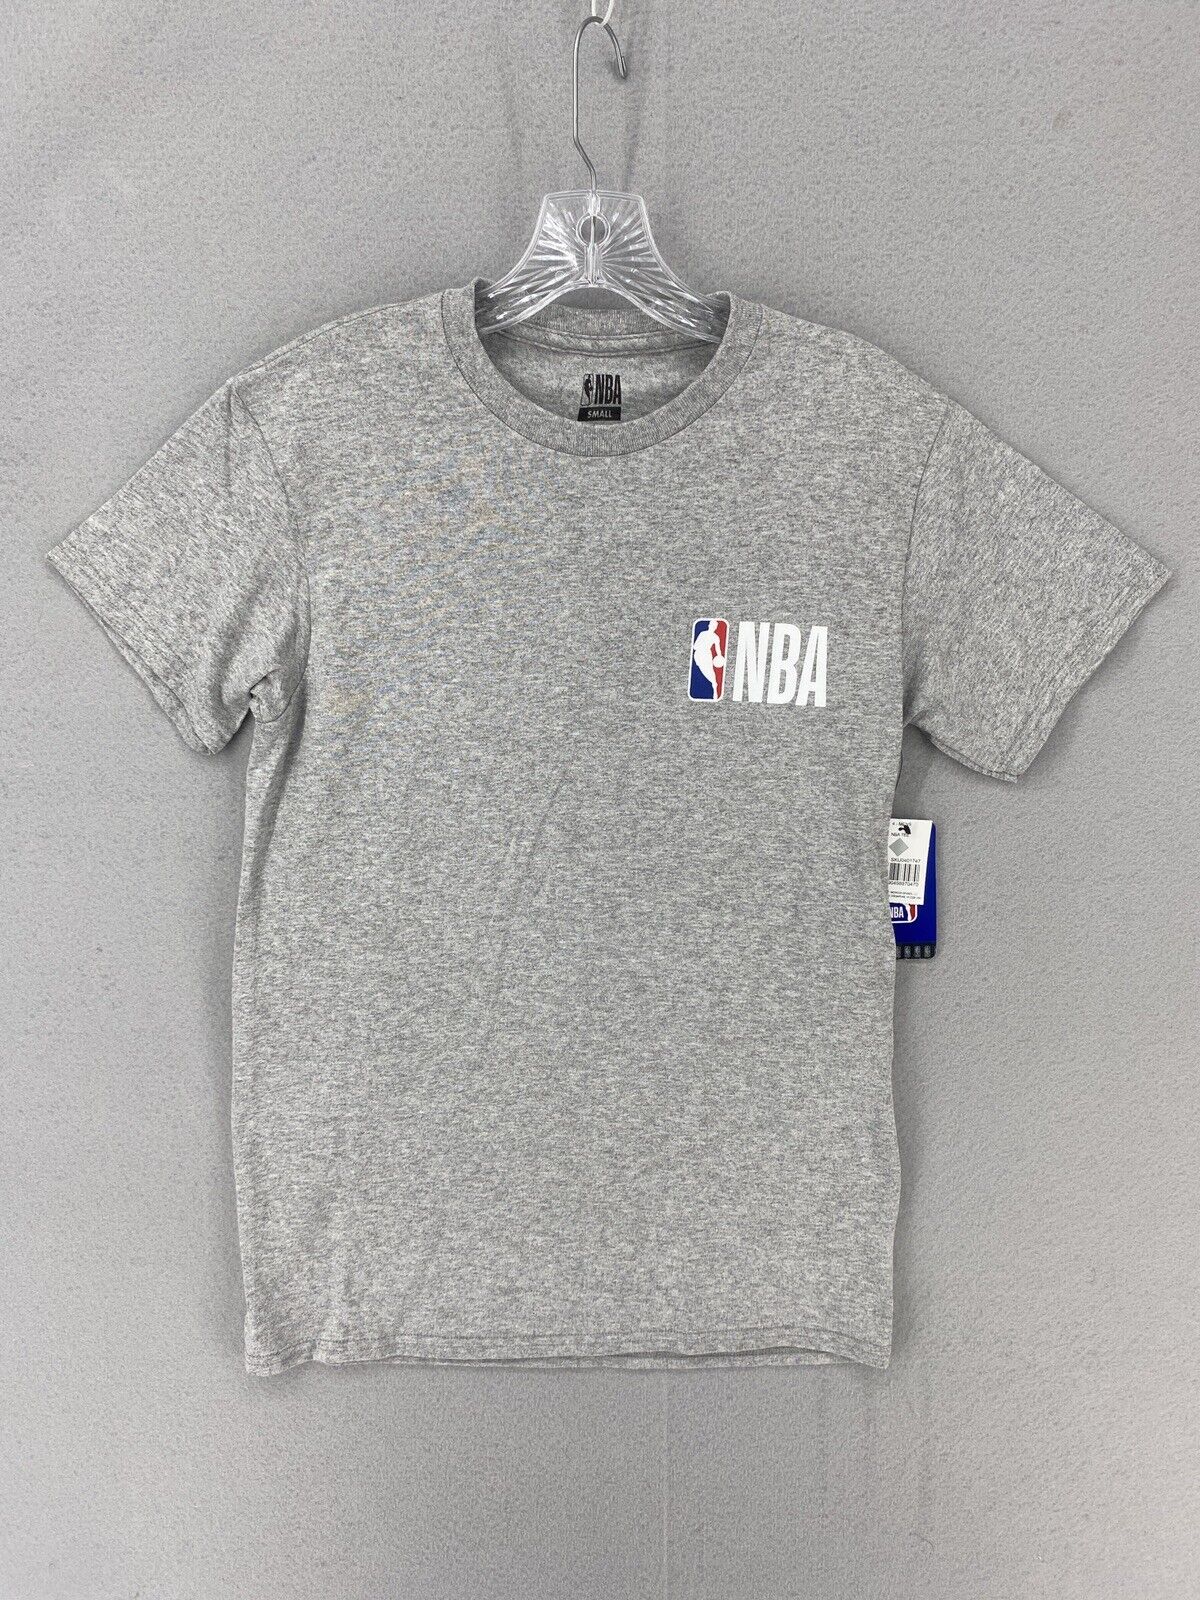 NBA T-Shirt Mens Size Small Gray Original Logo Short Sleeve Tee Basketball